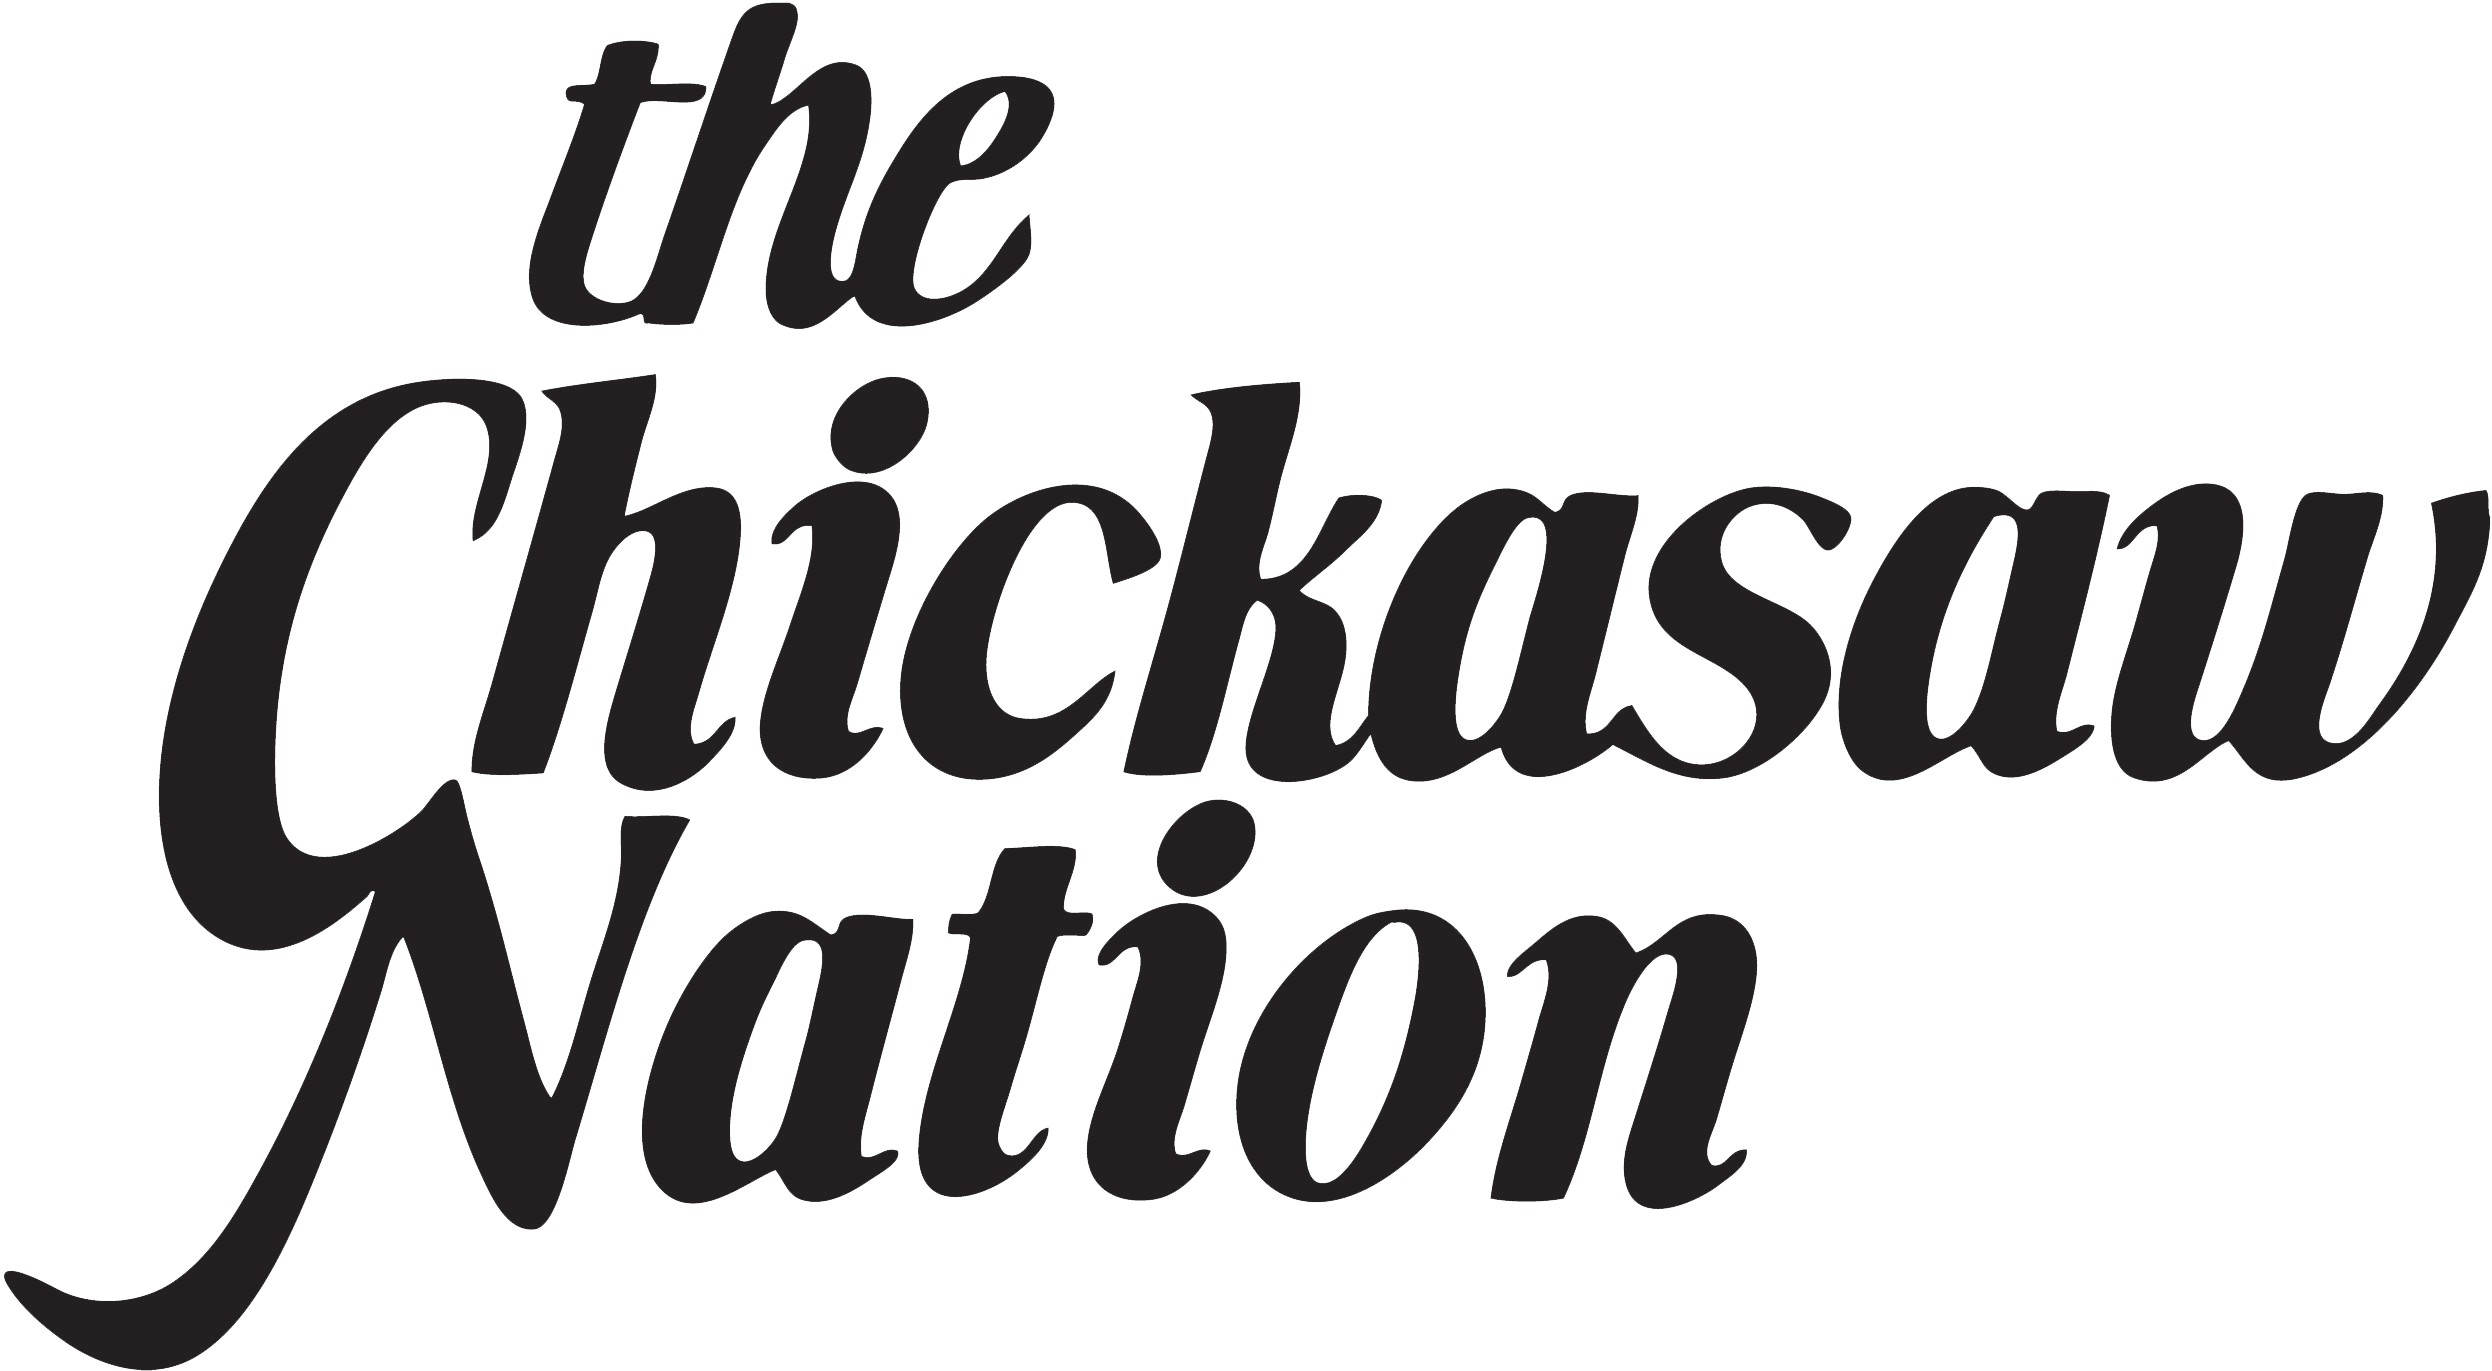 Chickasaw Nation logo